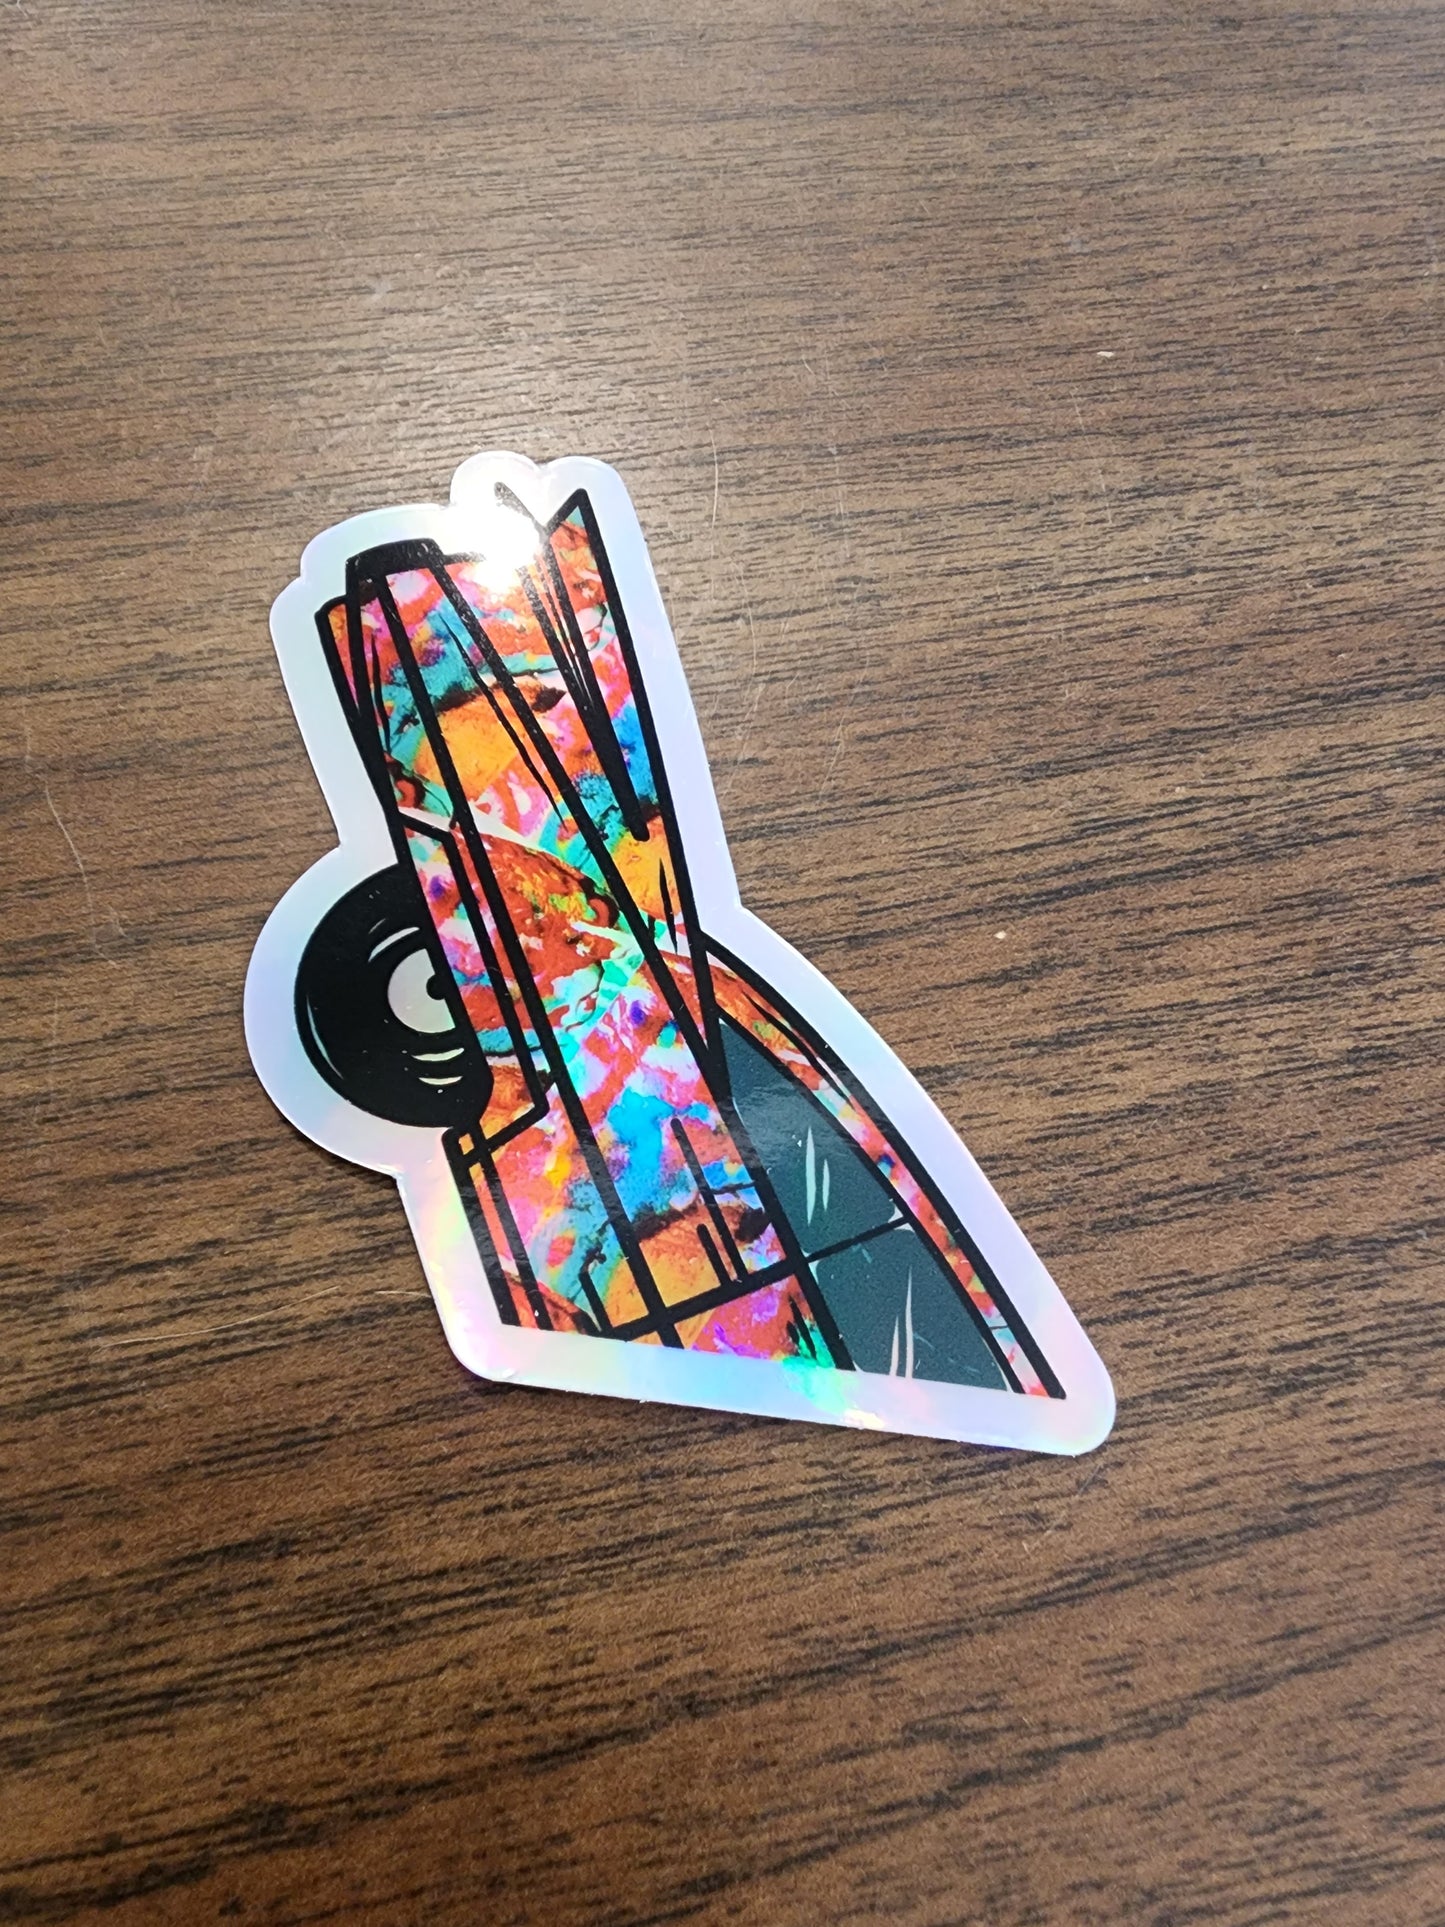 4. Large Holographic Multicolor Tailfin Sticker